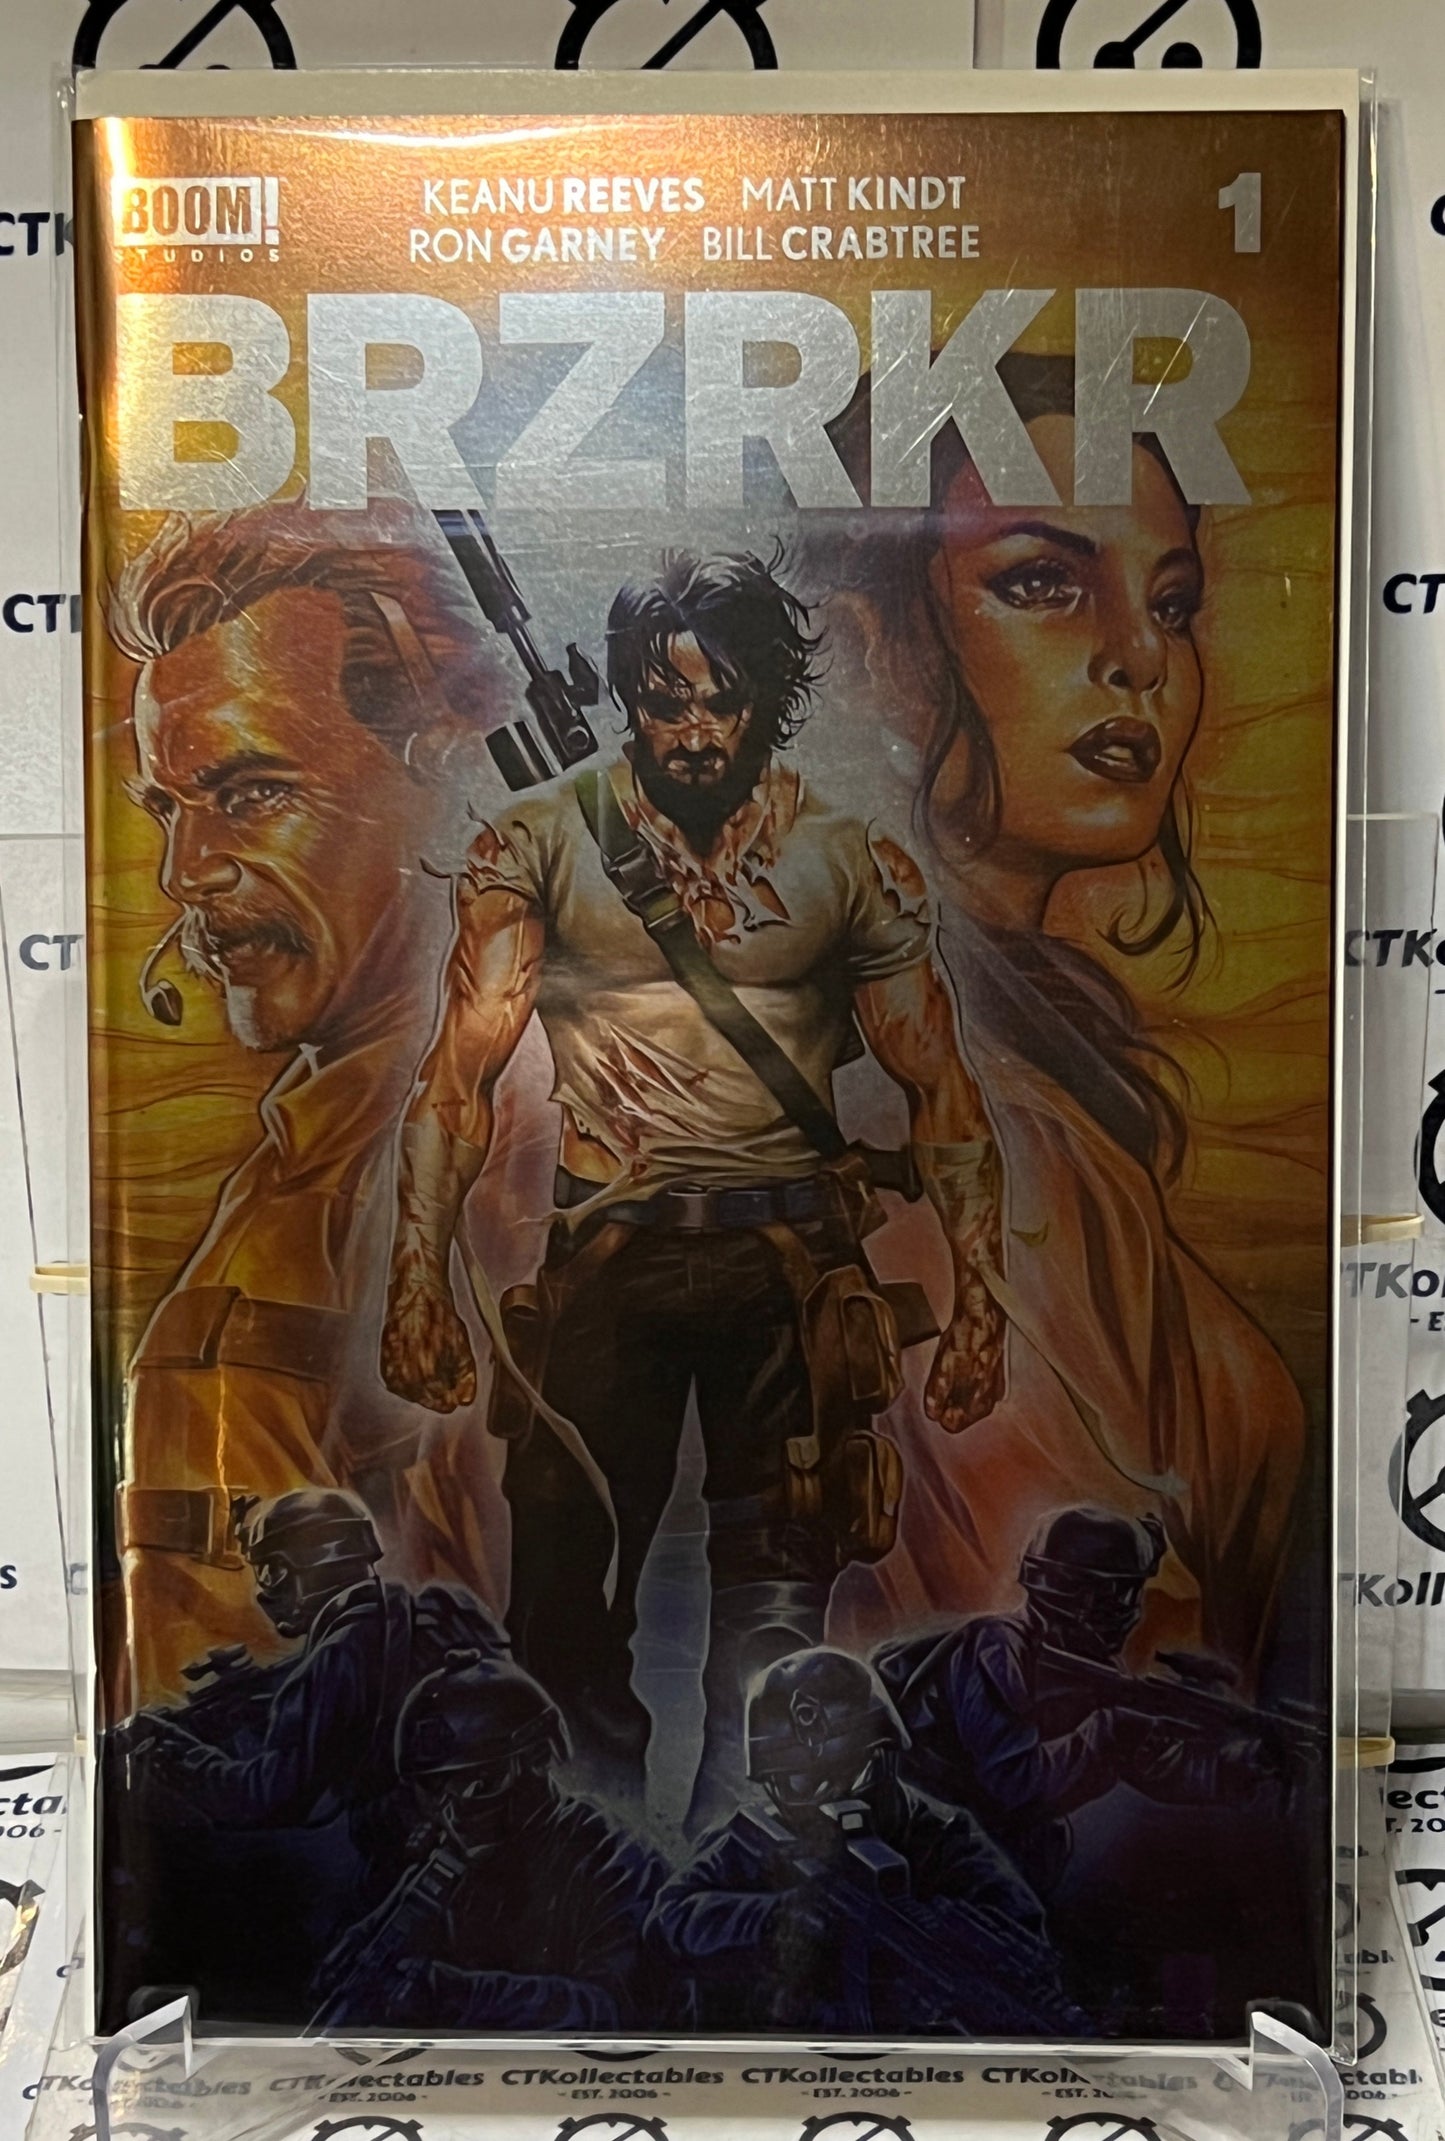 BRZRKR (BERZERKER) # 1 FOIL VARIANT D MARK BROOKS  BOOM STUDIOS COMIC BOOK 2023